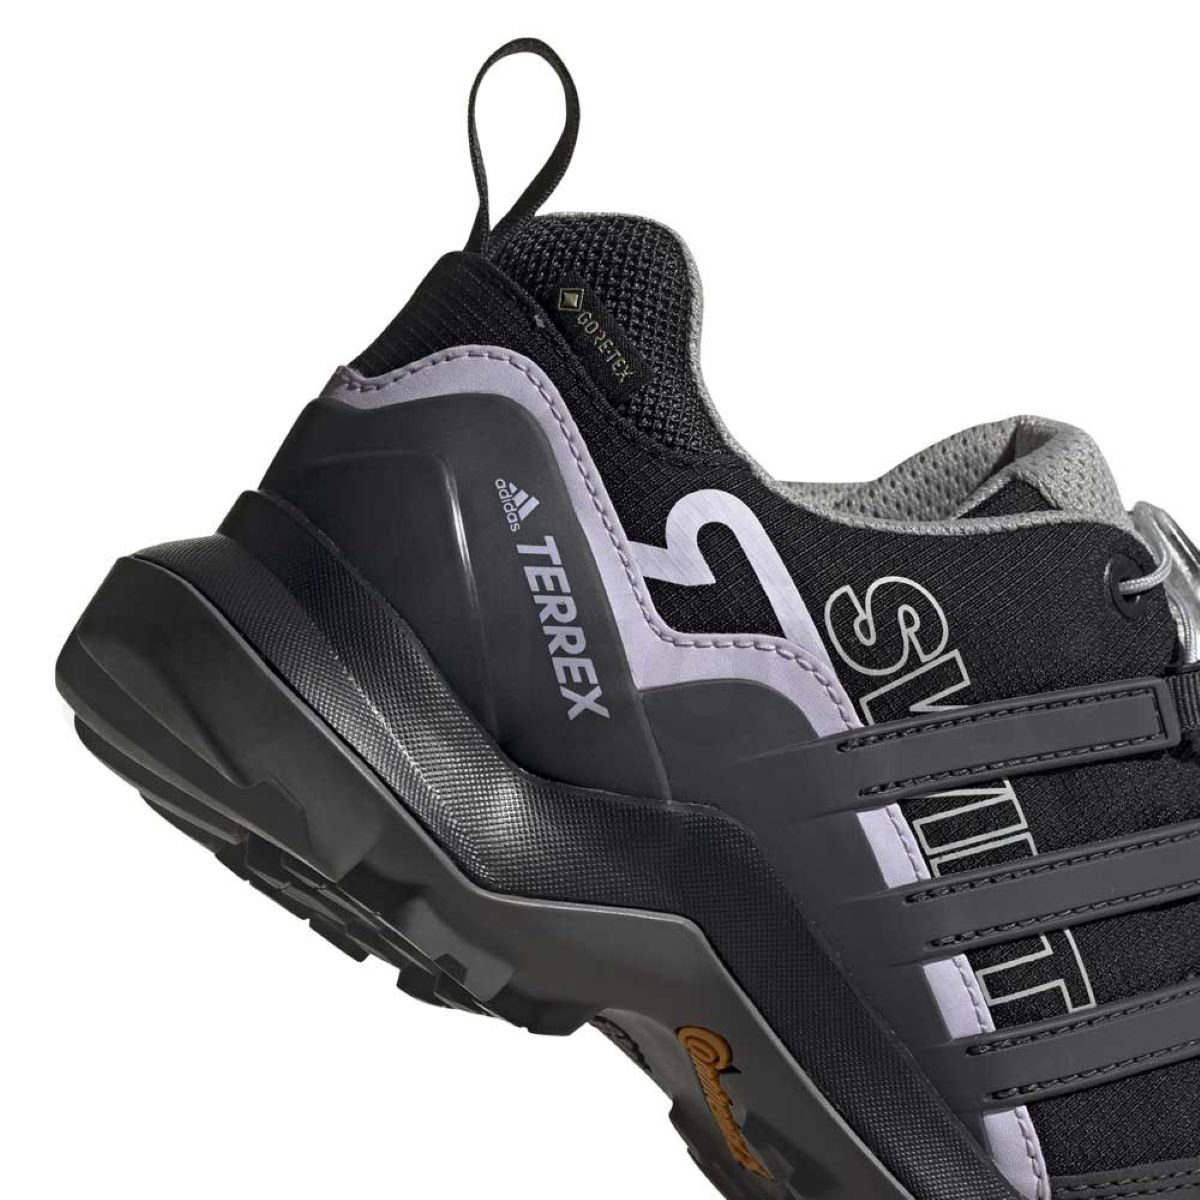 Obuv Adidas Terrex Swift R2 GTX W - černá/šedá